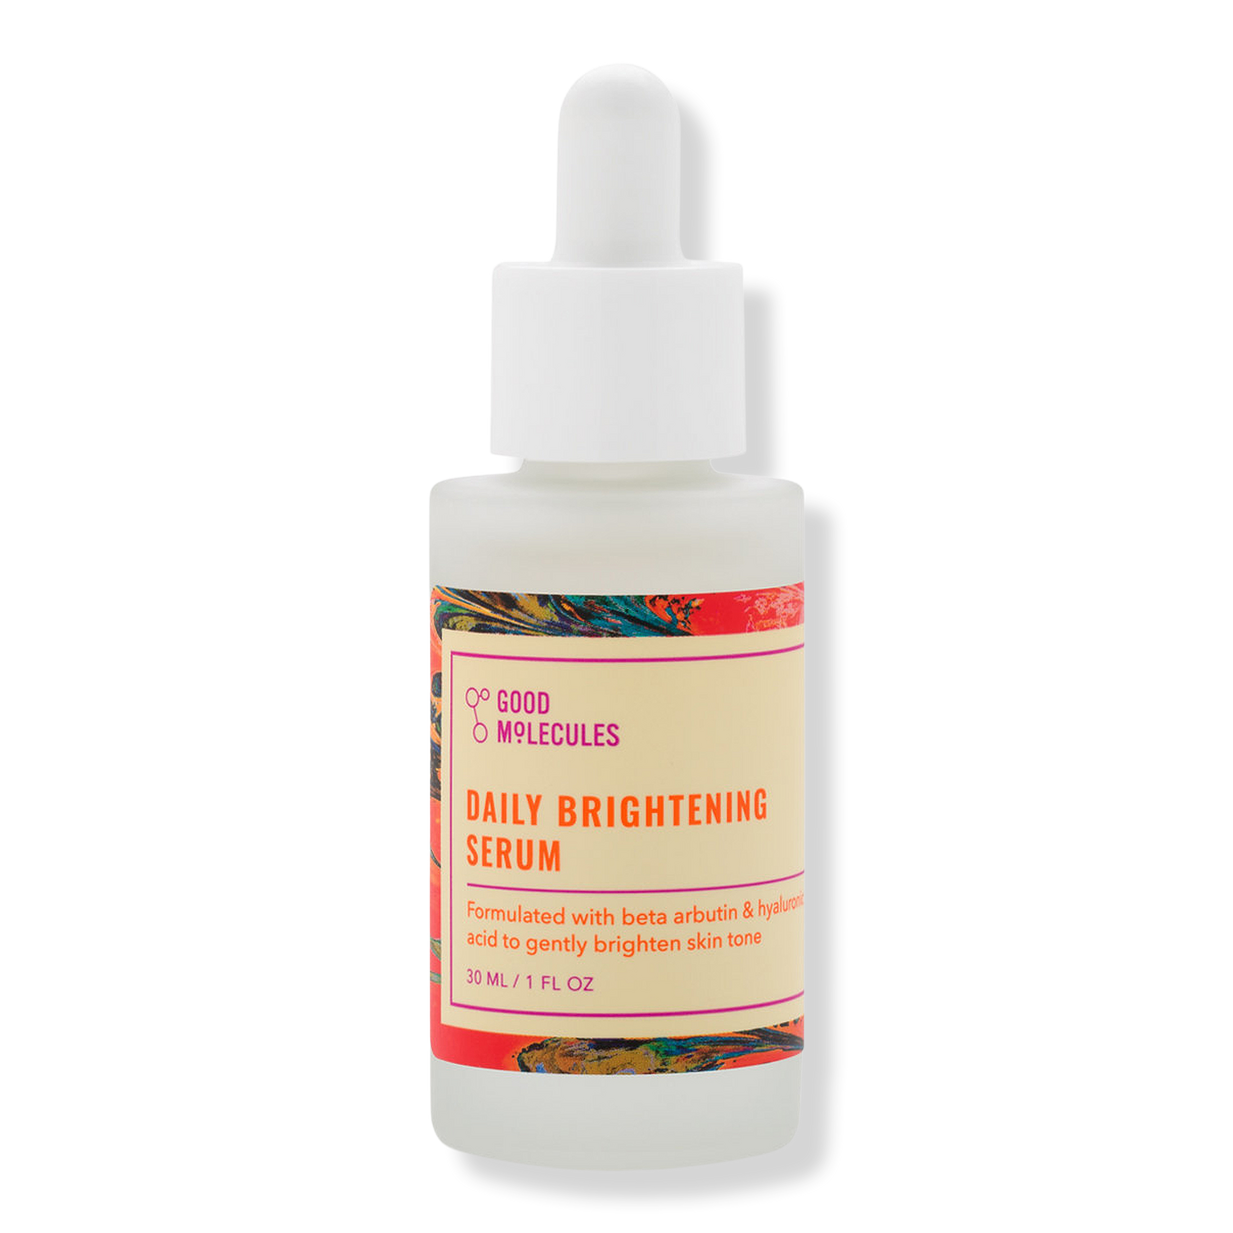 Daily Brightening Serum - Good Molecules